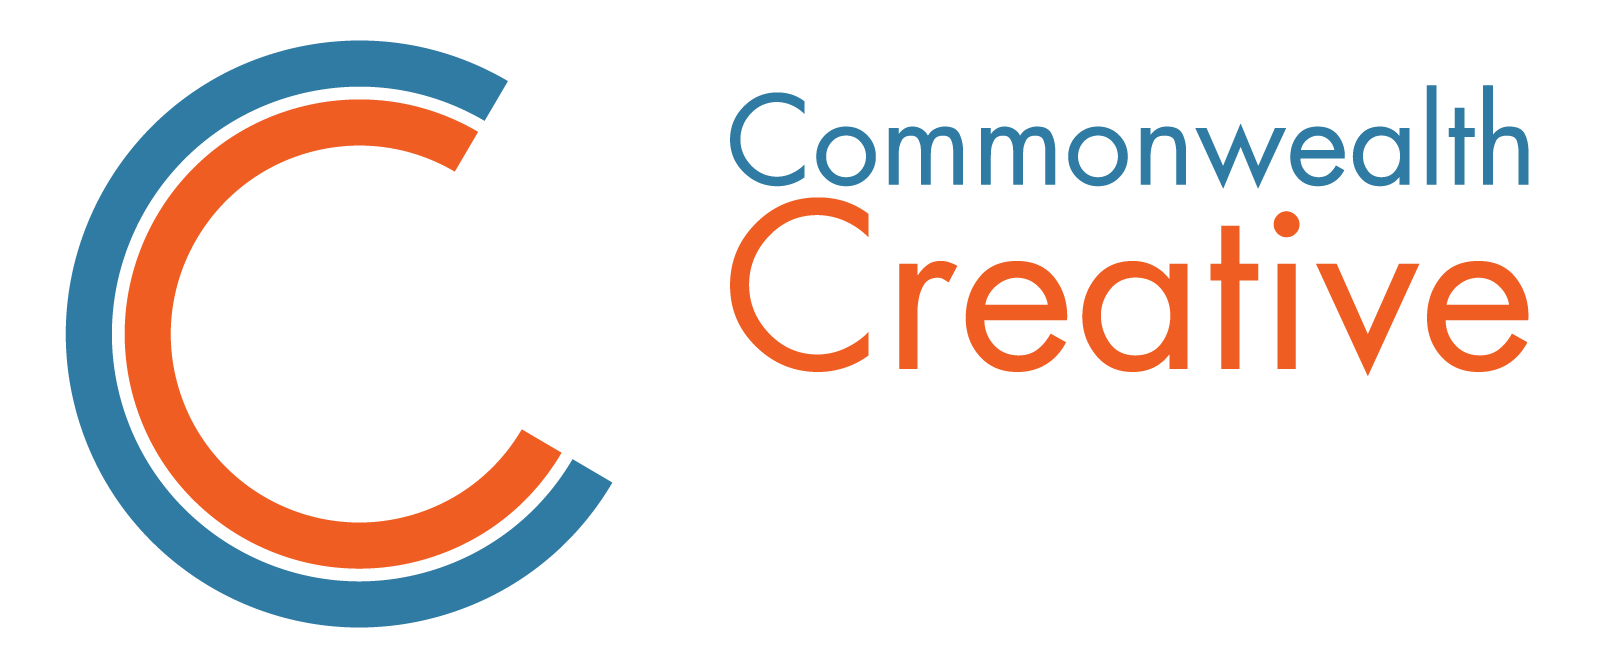 Commonwealth Creative Marketing logo